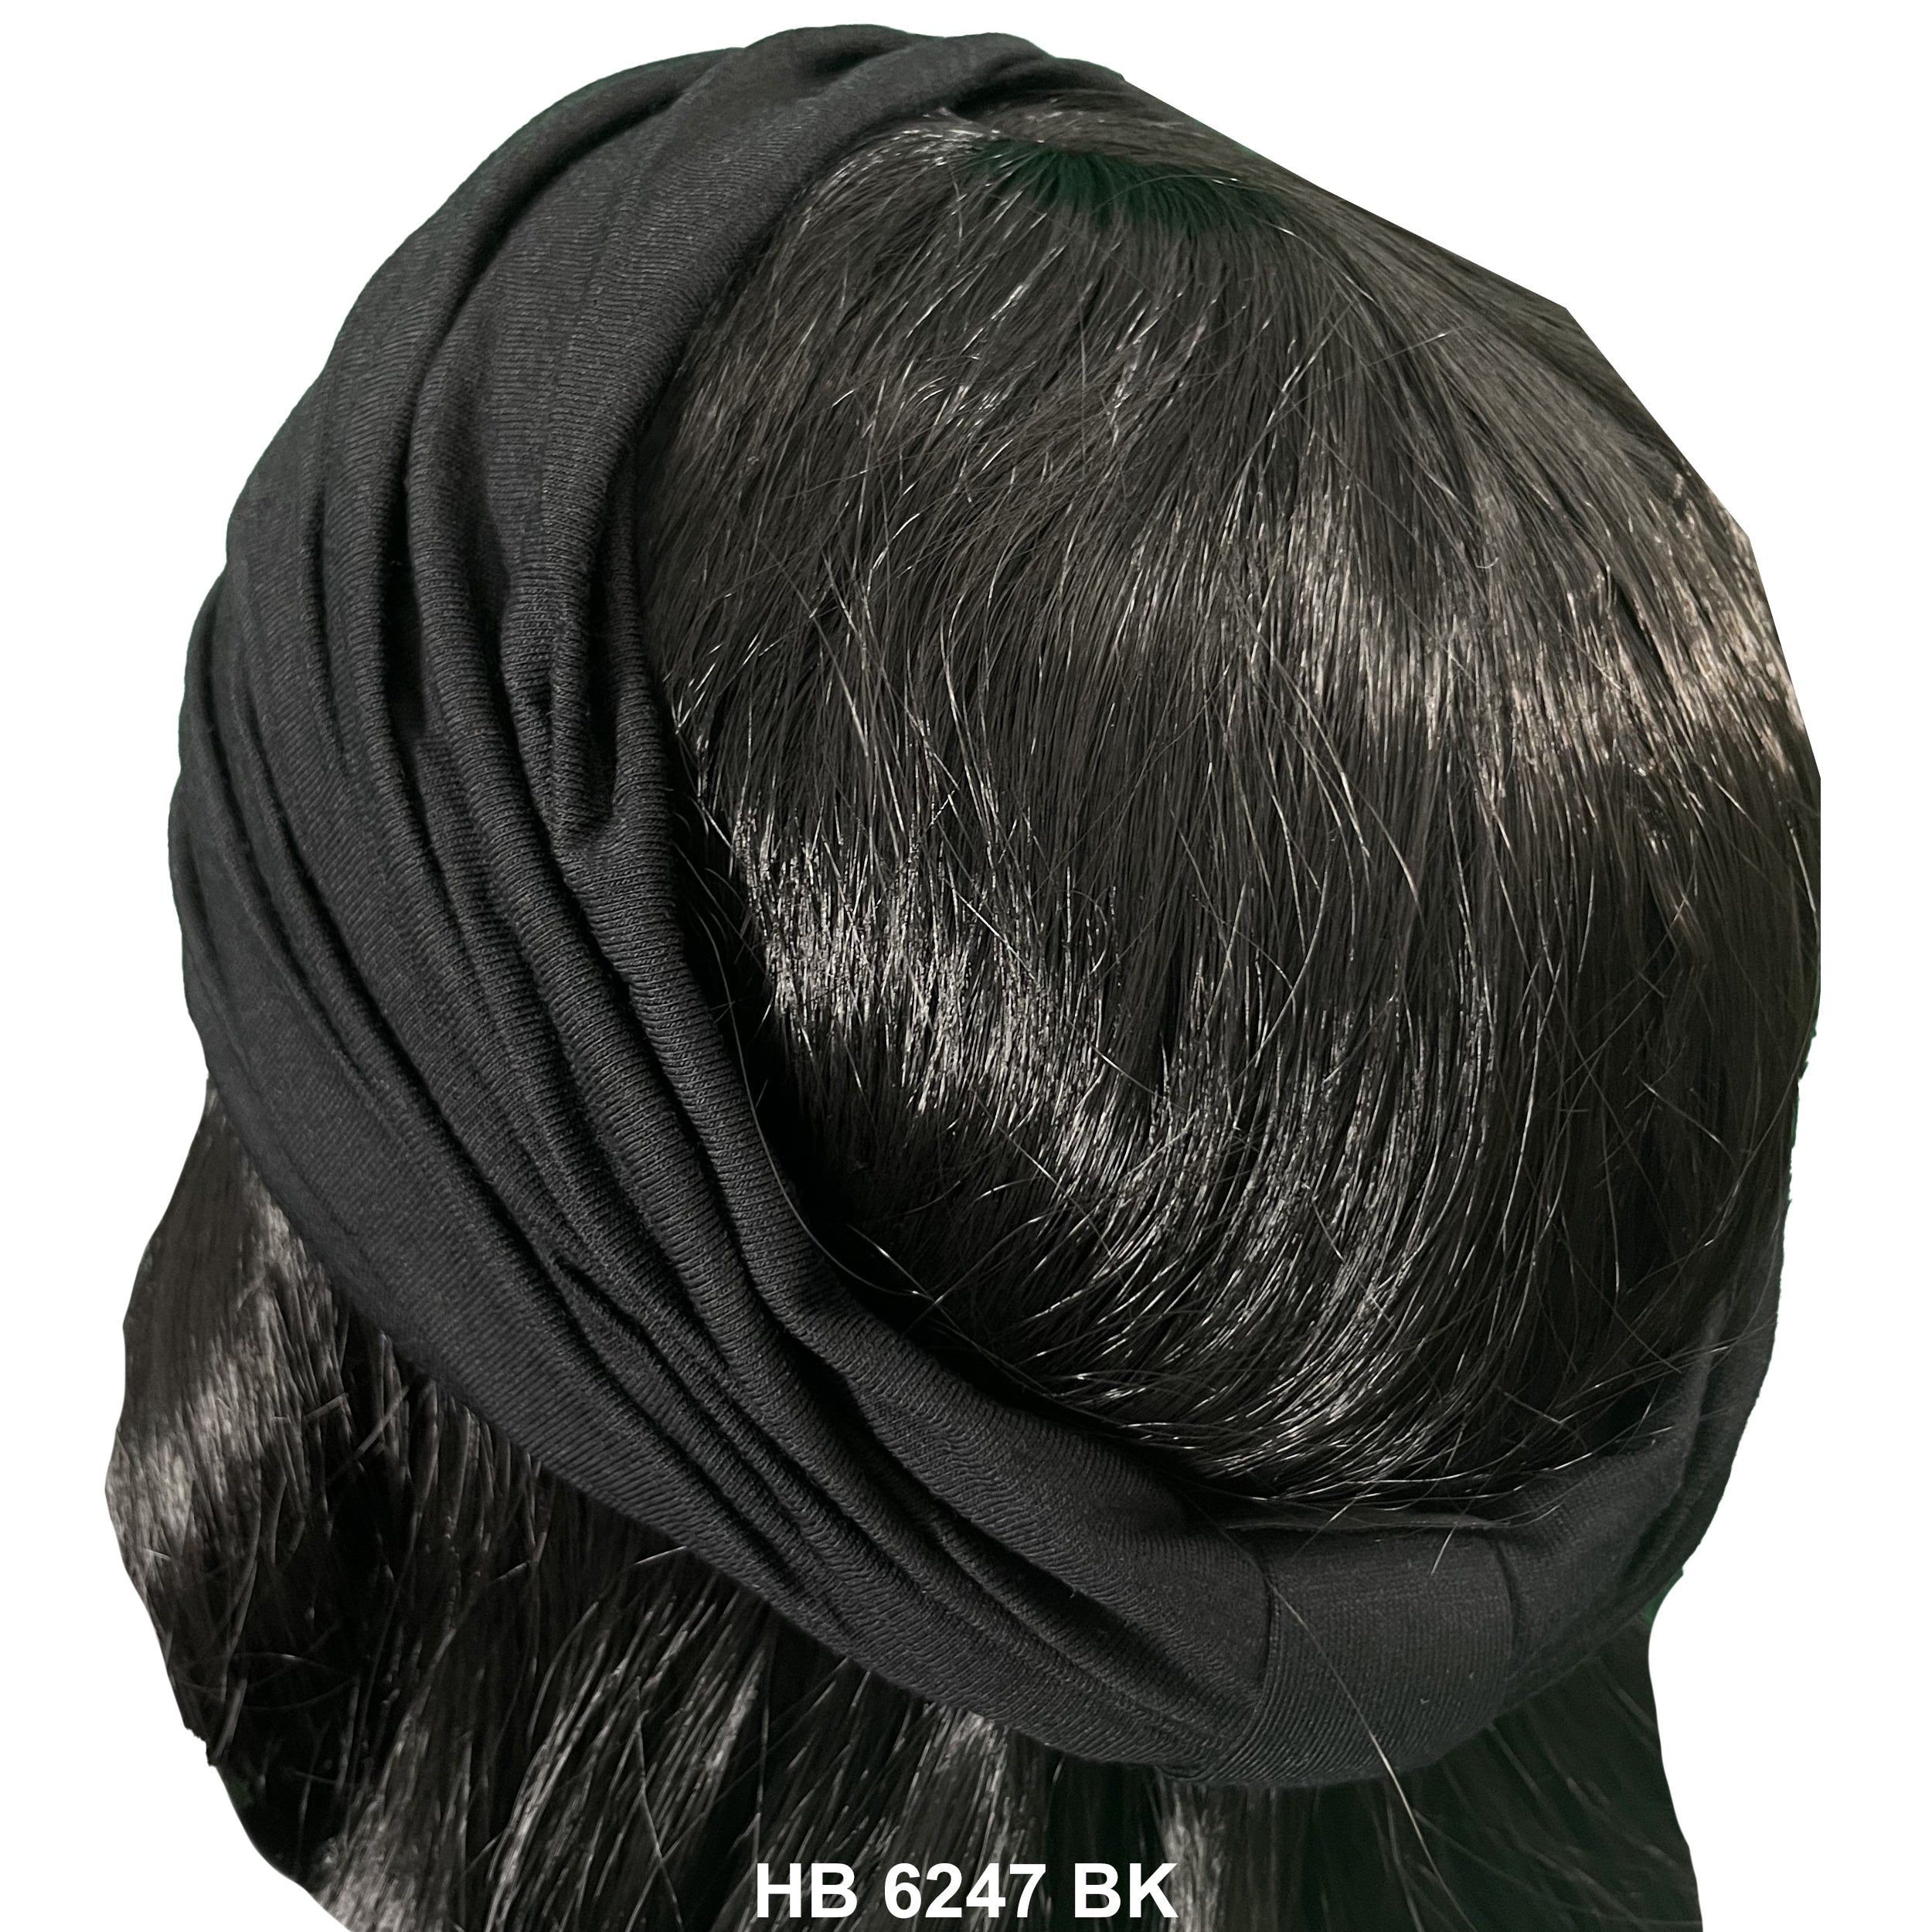 Fashion Headbands HB 6247 BK